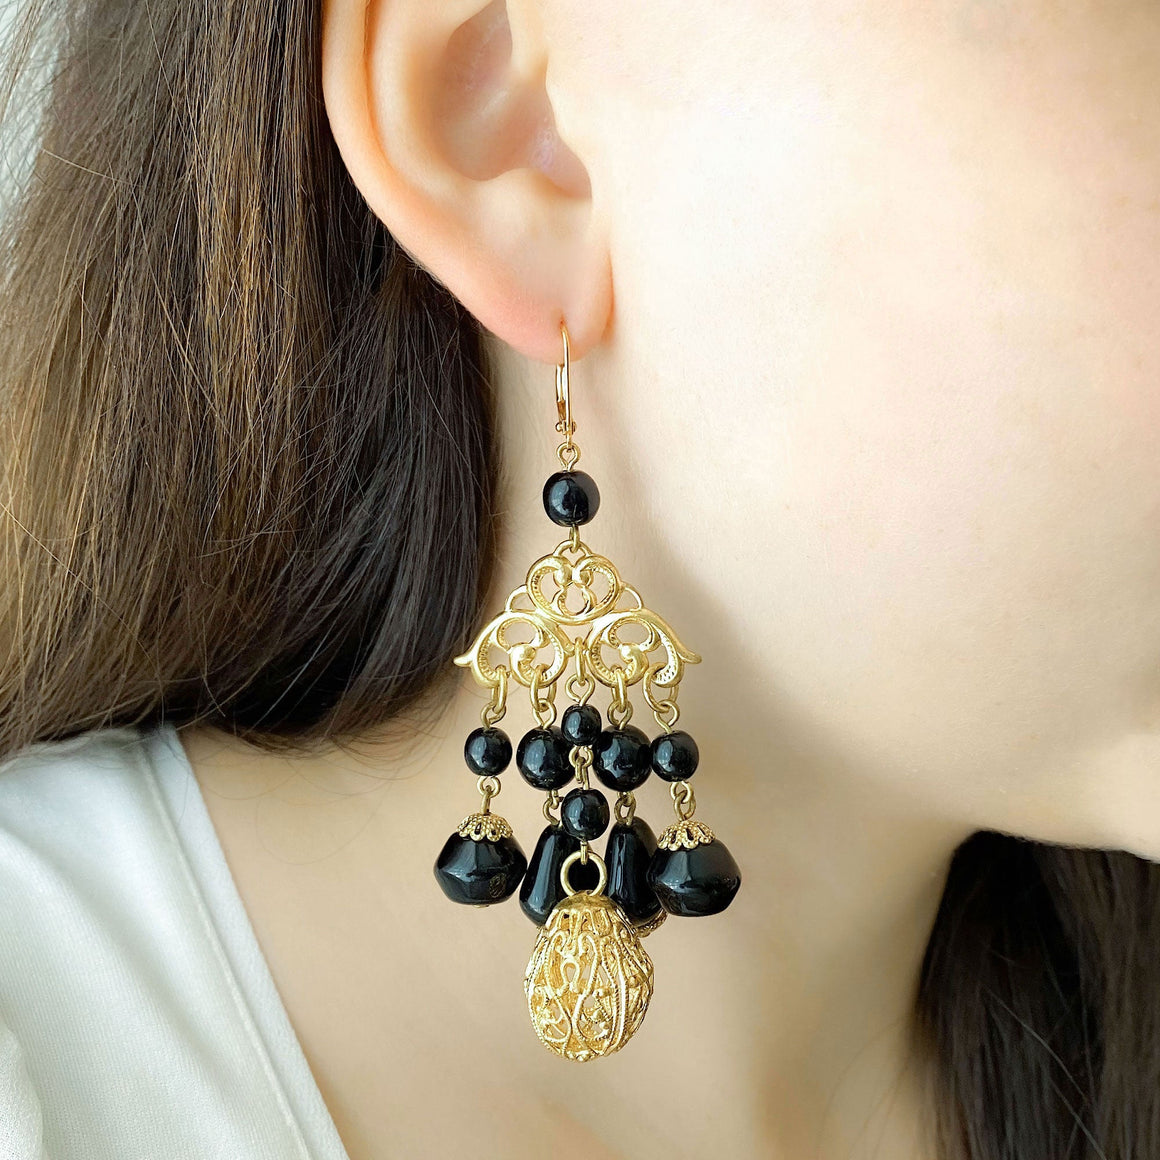 MONTROSE vintage gold and black chandelier earrings-GREEN BIJOU